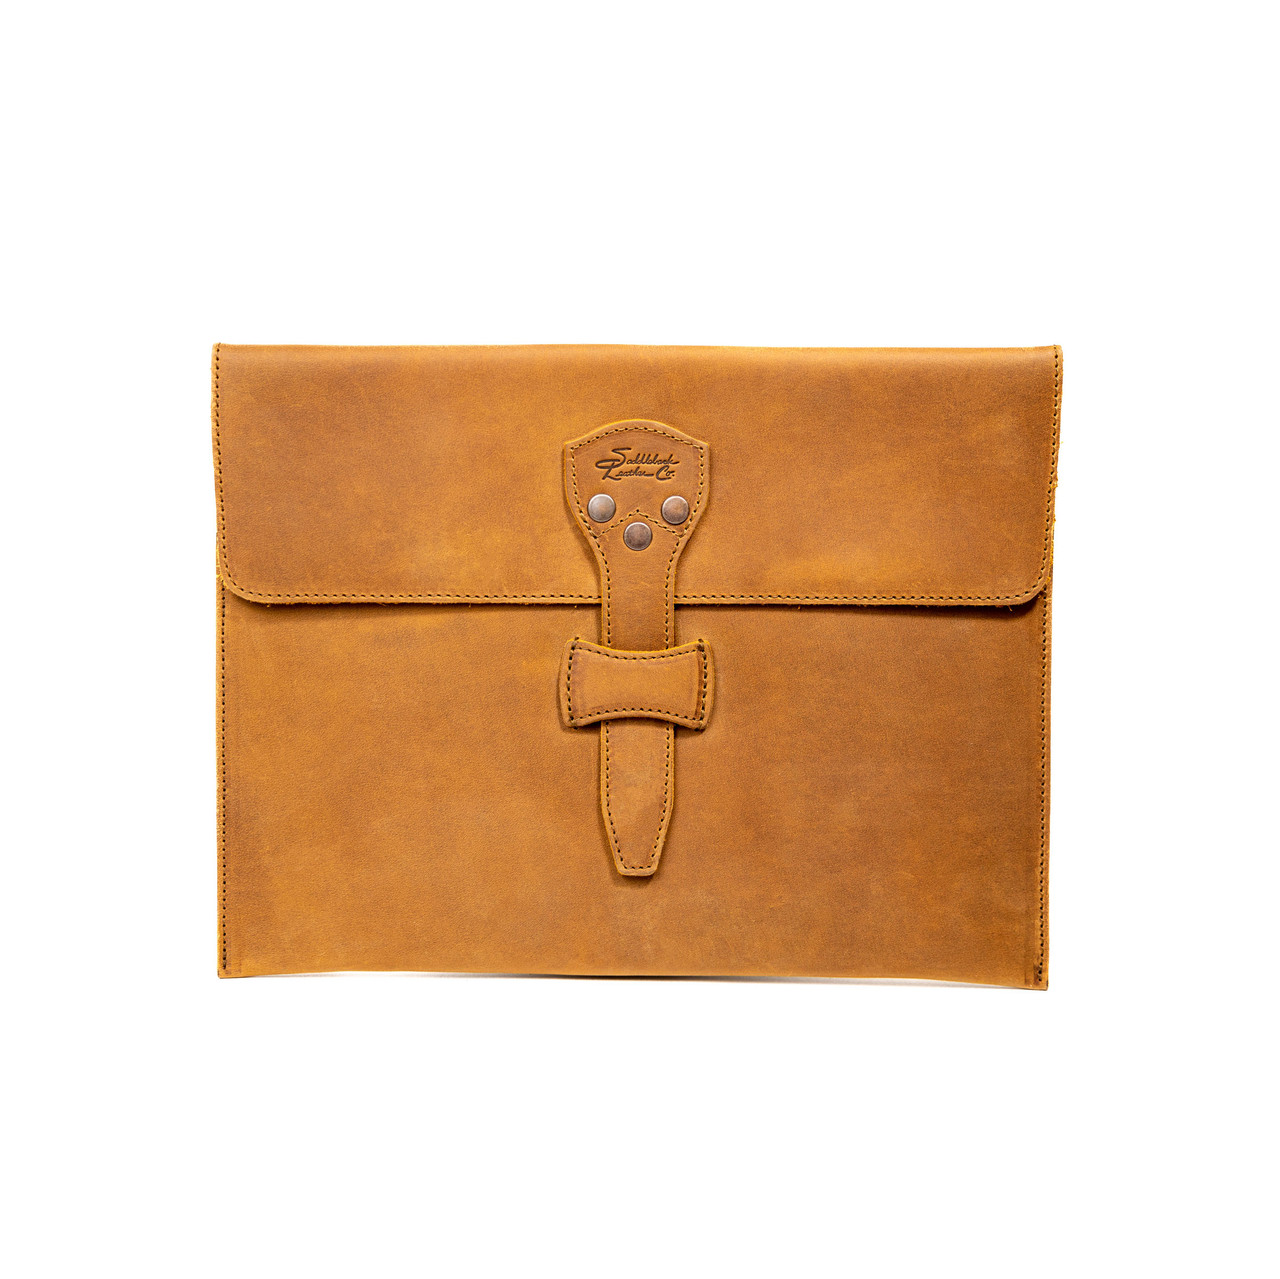 Real Leather Portfolio Case A4 Document Holder